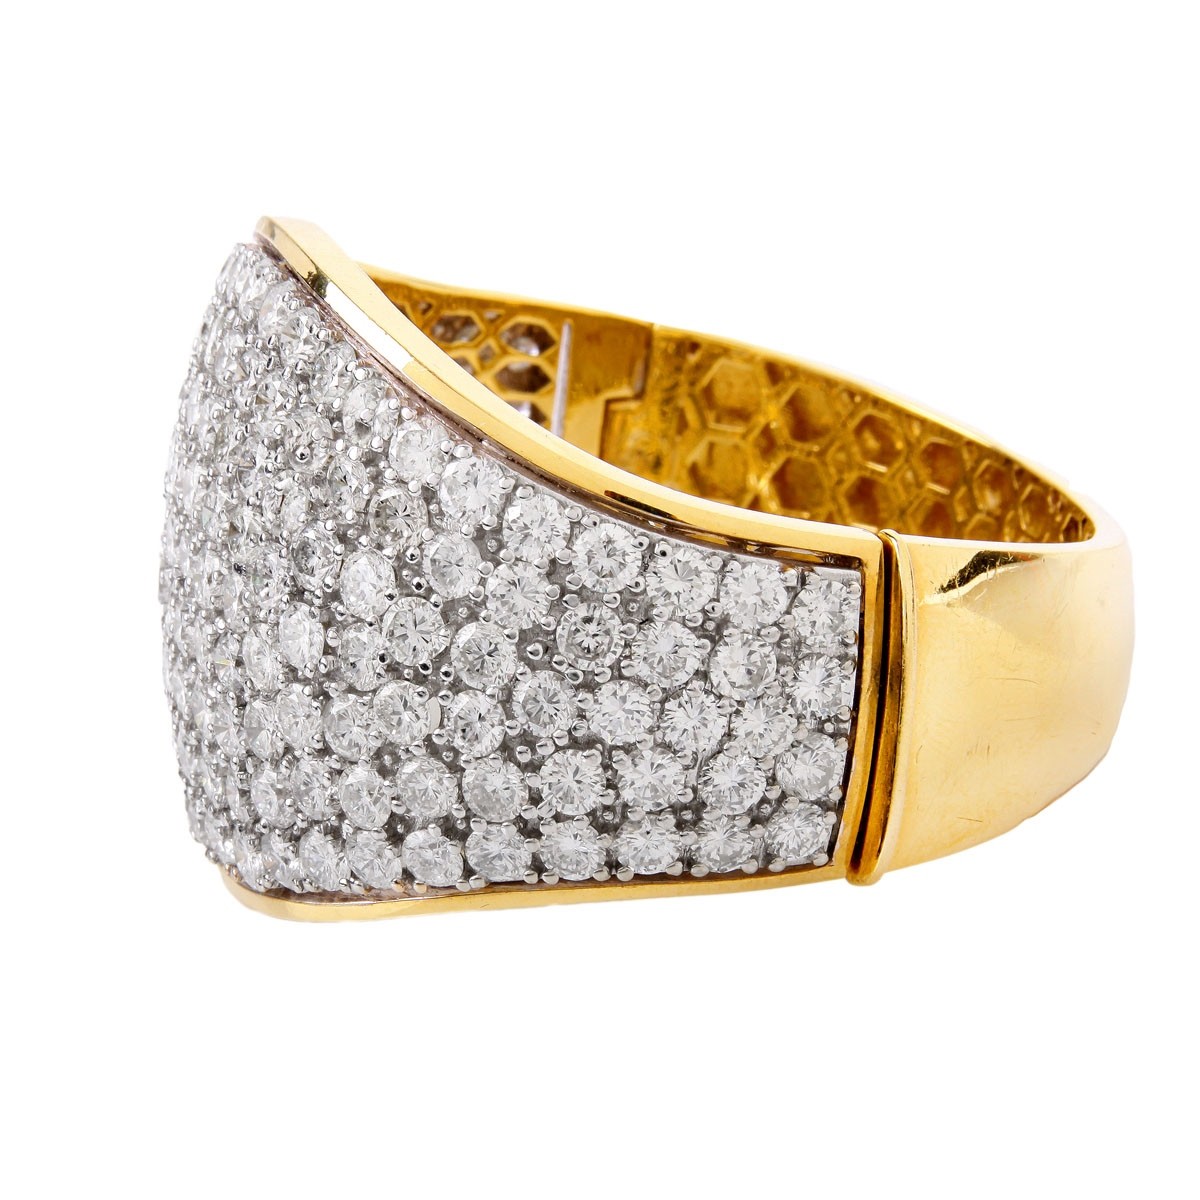 Contemporary 42.00 Carat Diamond Bangle Bracelet - Image 2 of 6